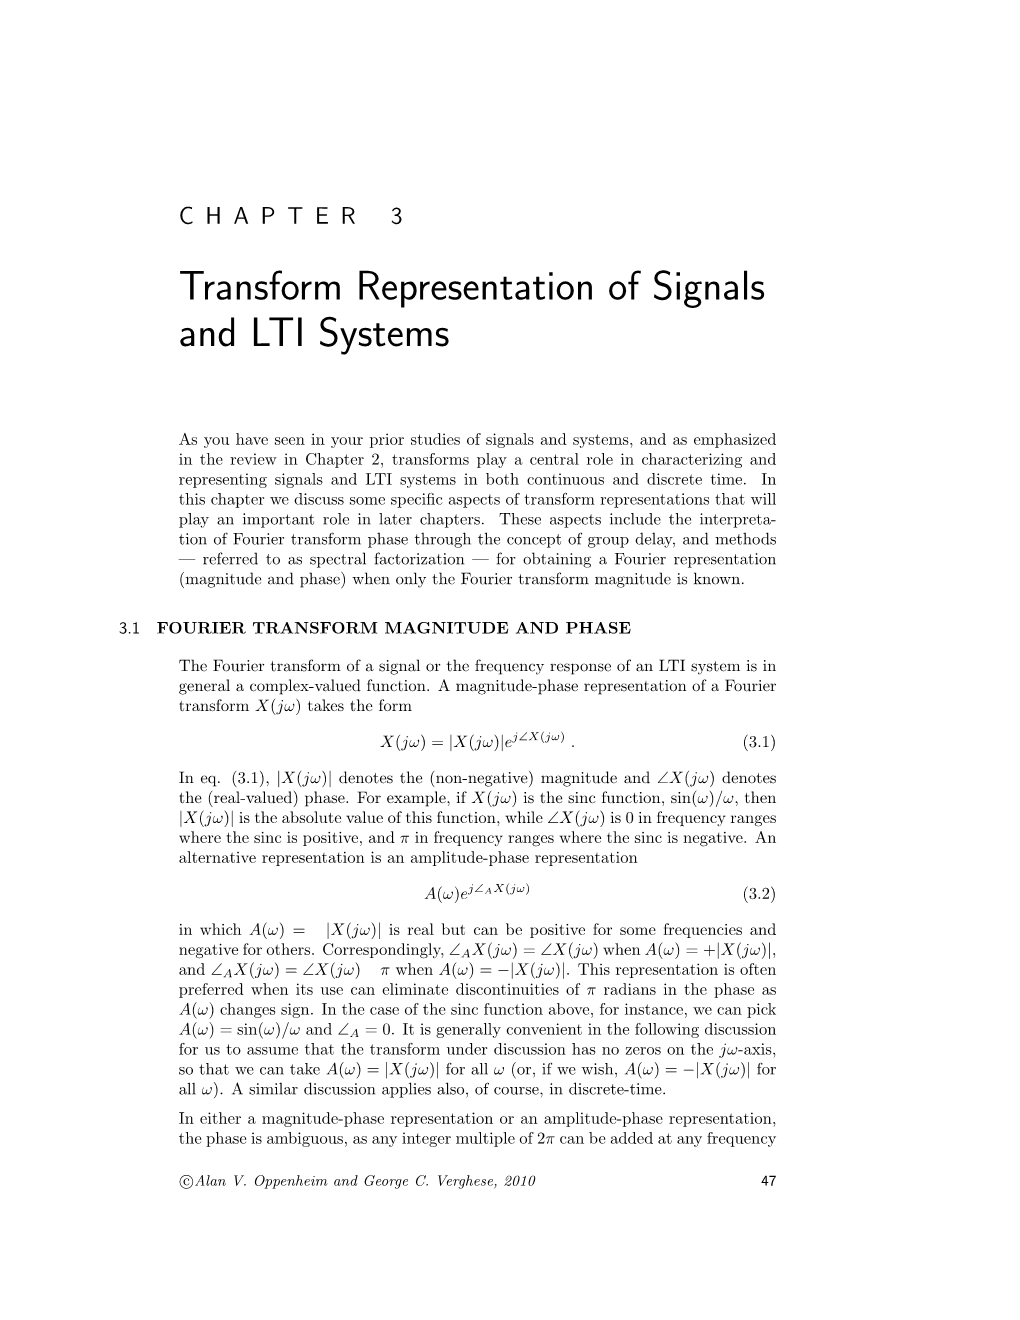 Transform Representation of Signals and LTI Systems